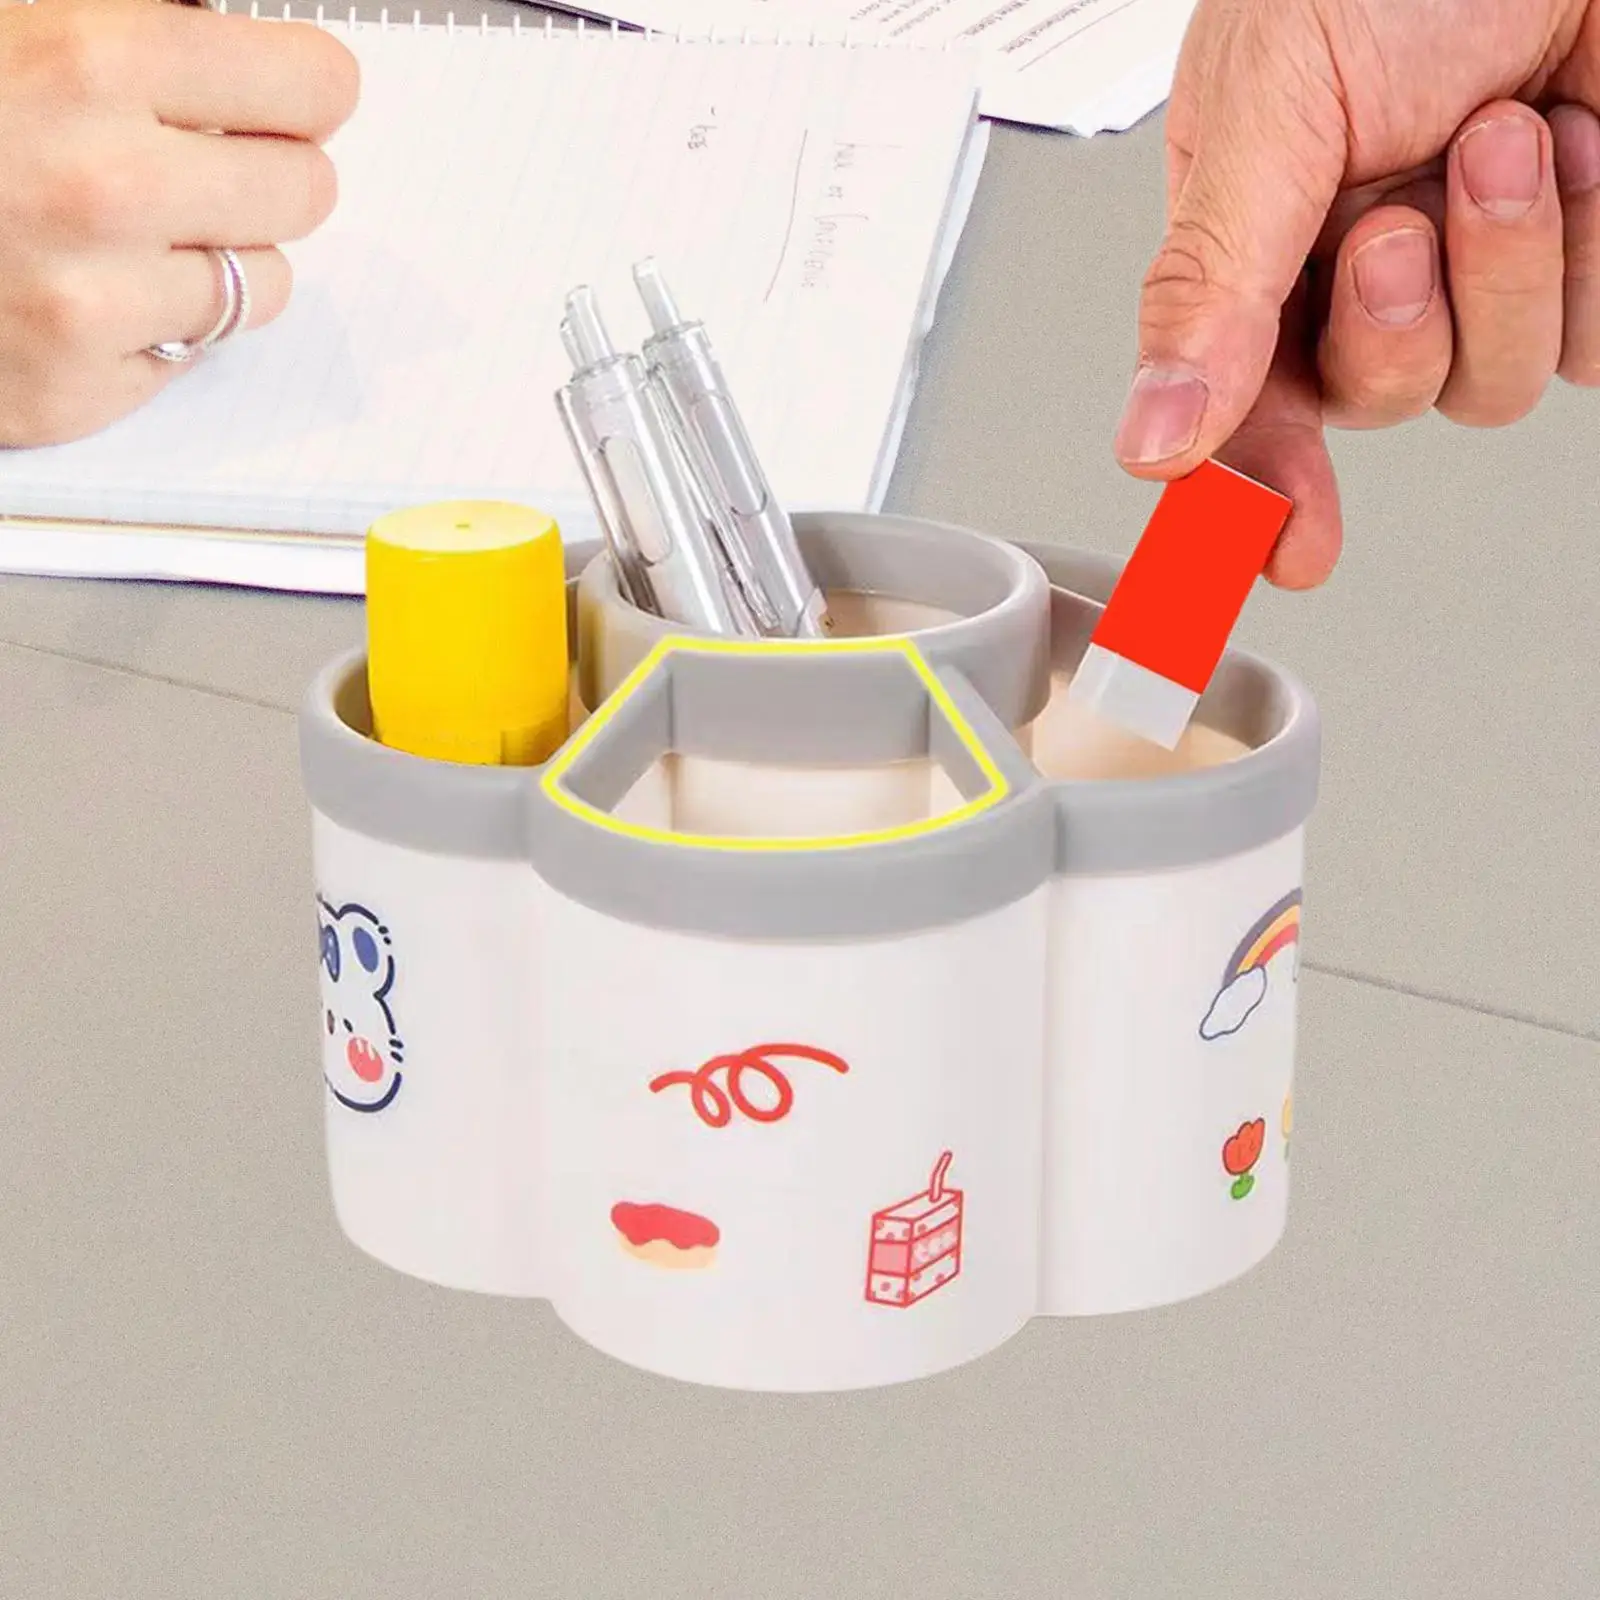 Pen Holder Stationery Supplies Desk Organizer Storage Rack Pencil Cup Makeup Brush Holder for Desk Dorm Home School Countertop